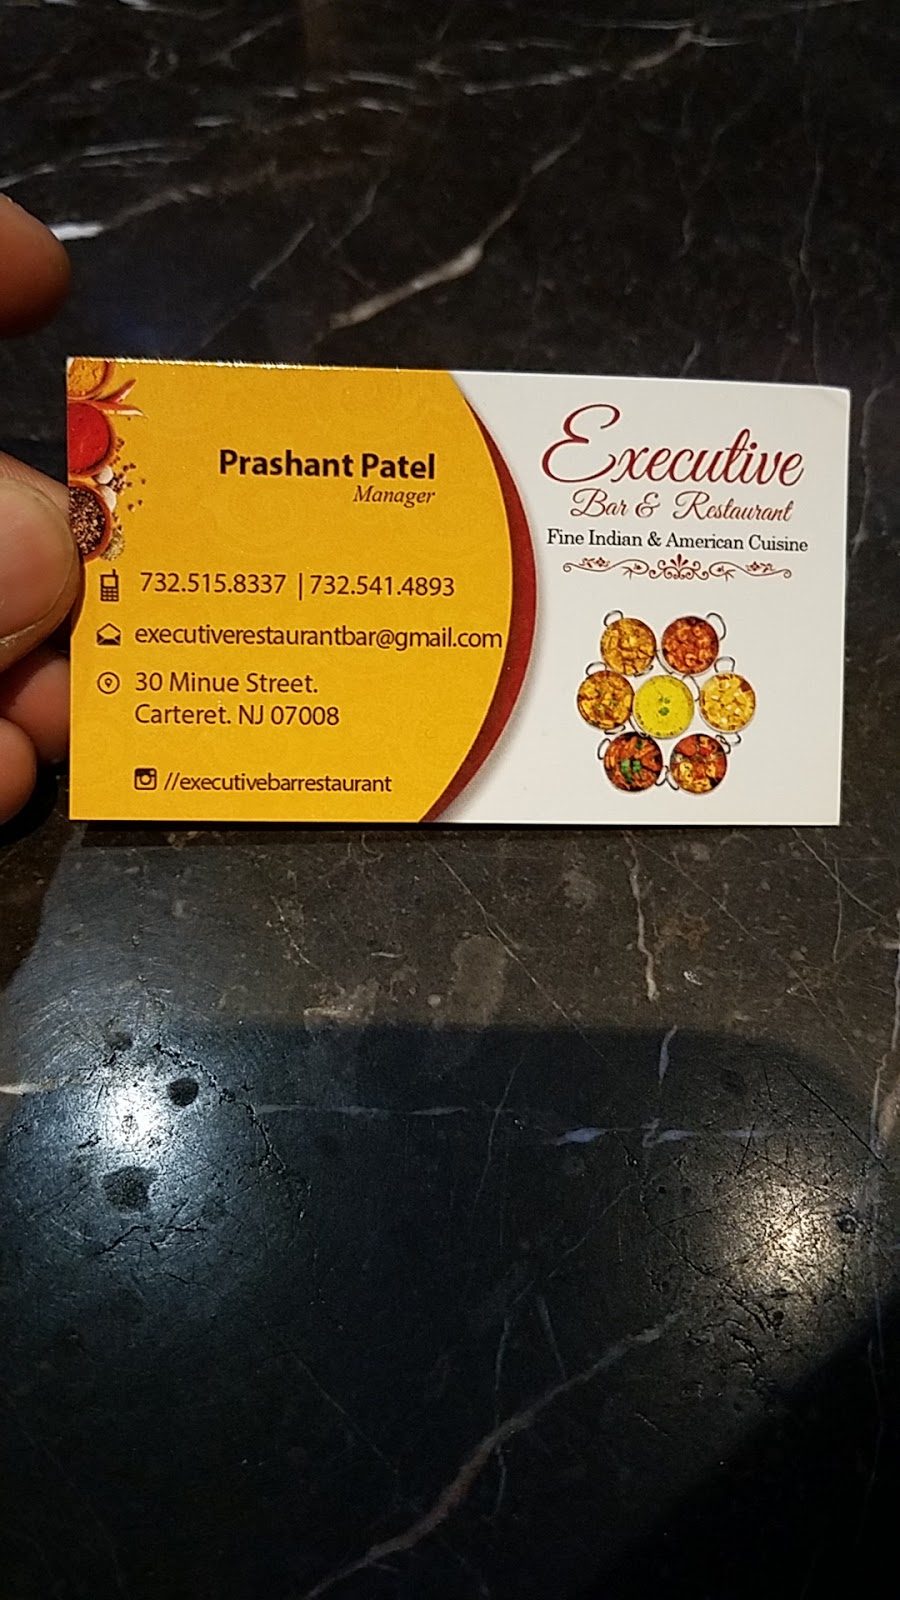 Executive bar & restaurant Fine Indian American cuisine | 30 Minue St, Carteret, NJ 07008 | Phone: (732) 541-4893